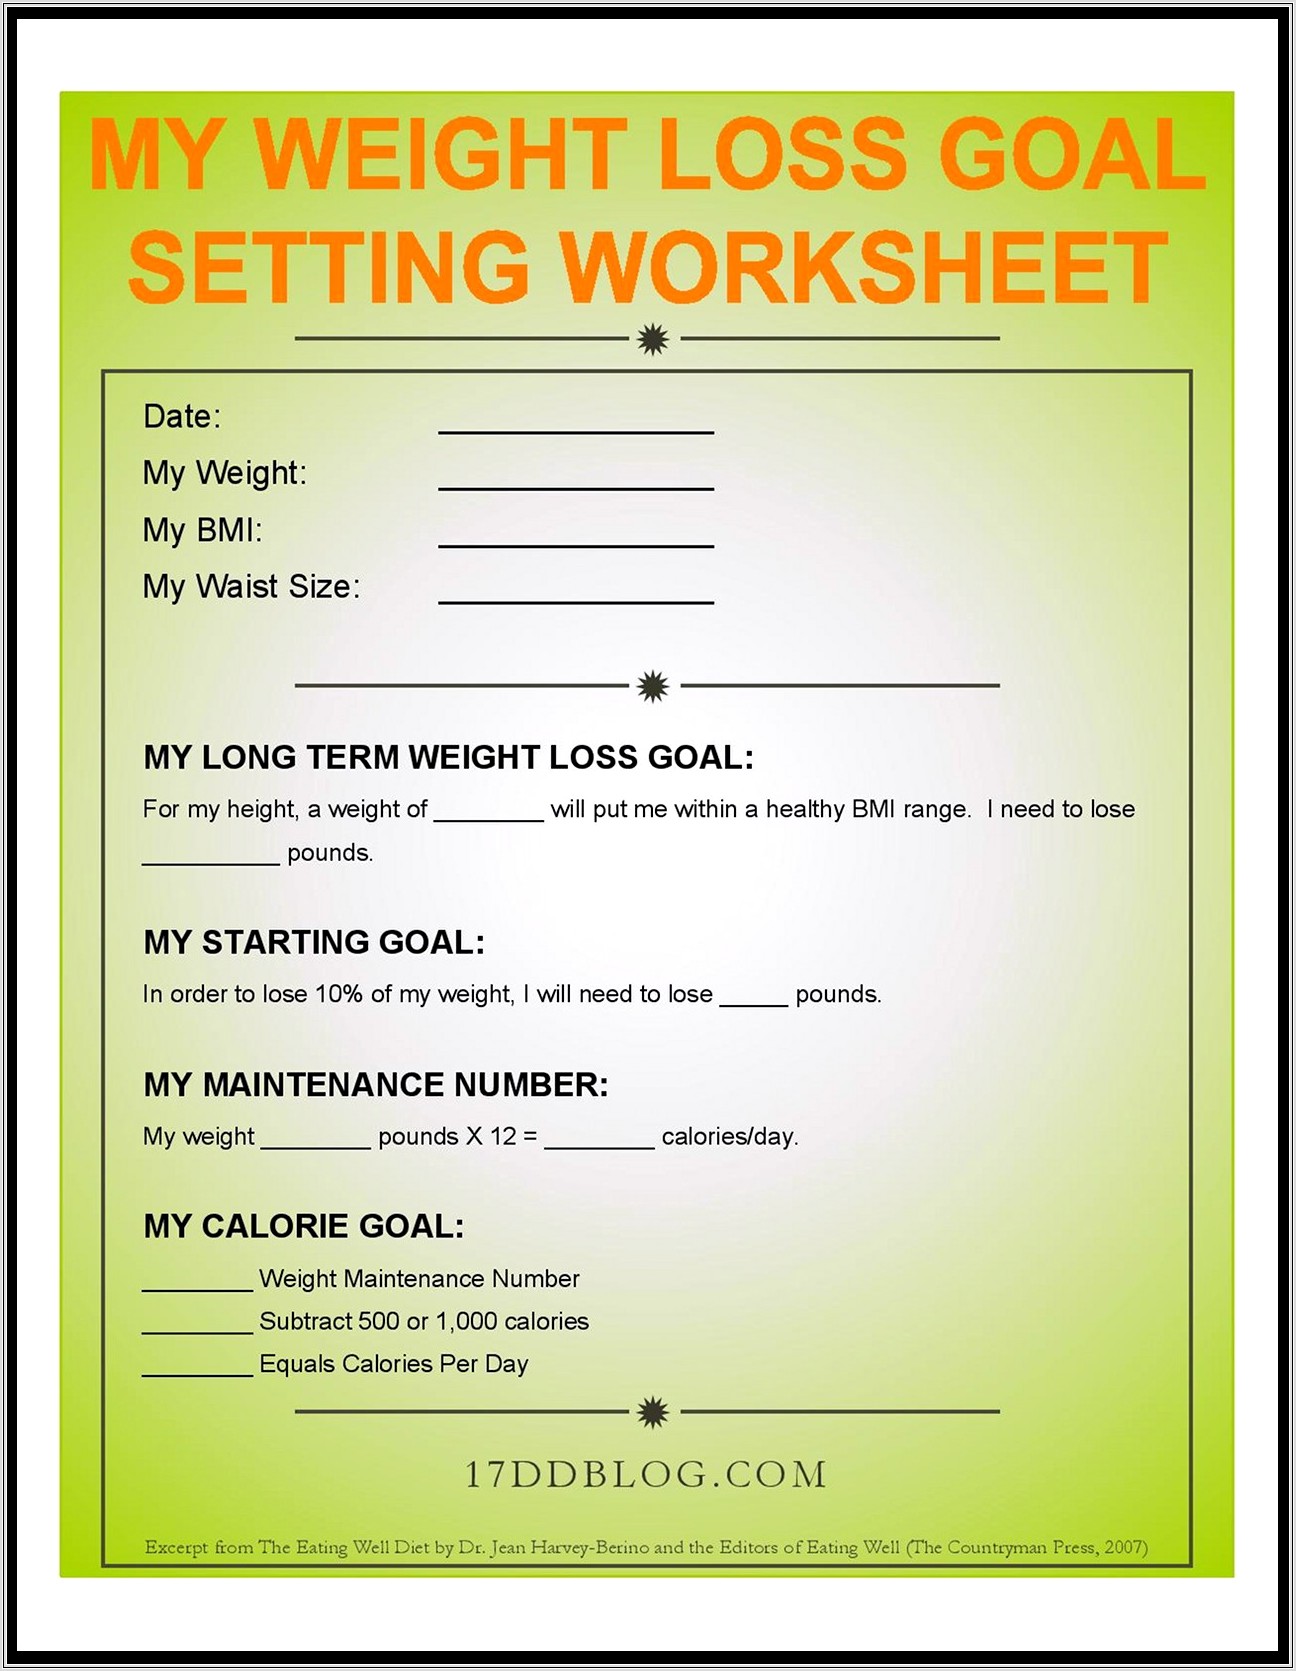 Goal Setting Worksheet Weight Loss